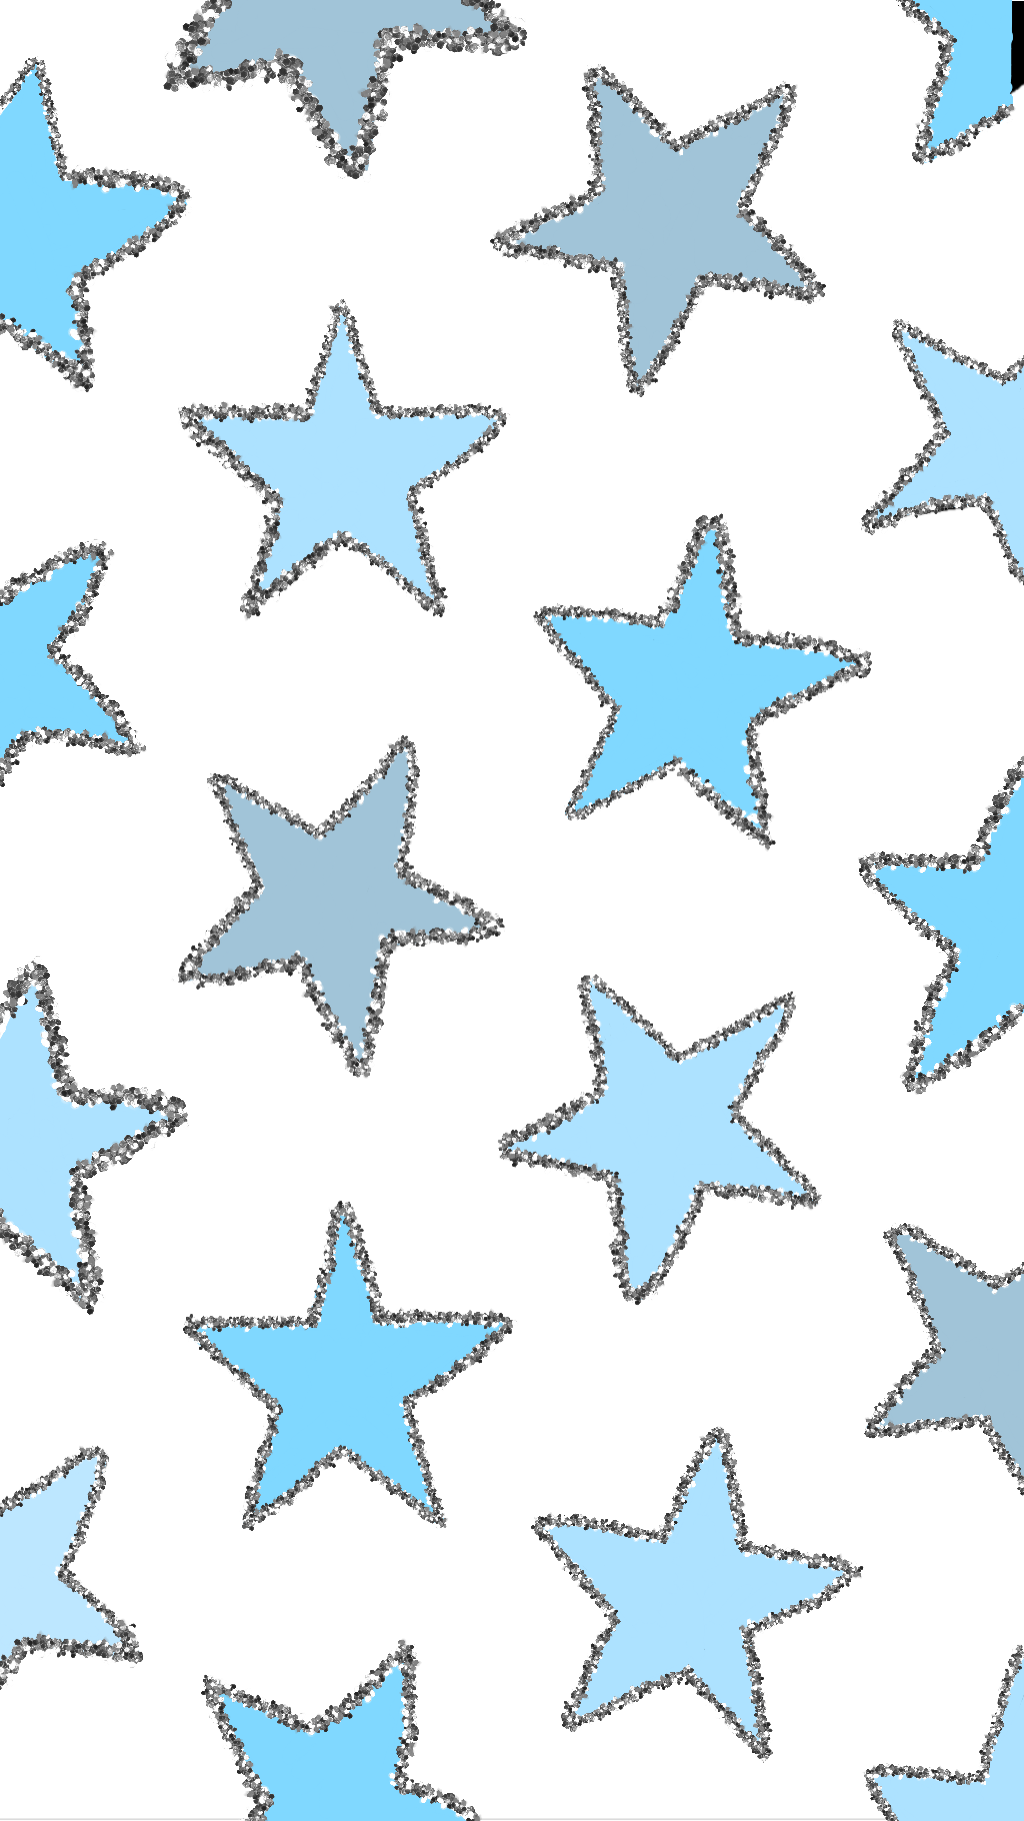 blue star wallpaper. Preppy wallpaper, Cute patterns wallpaper, Blue star wallpaper